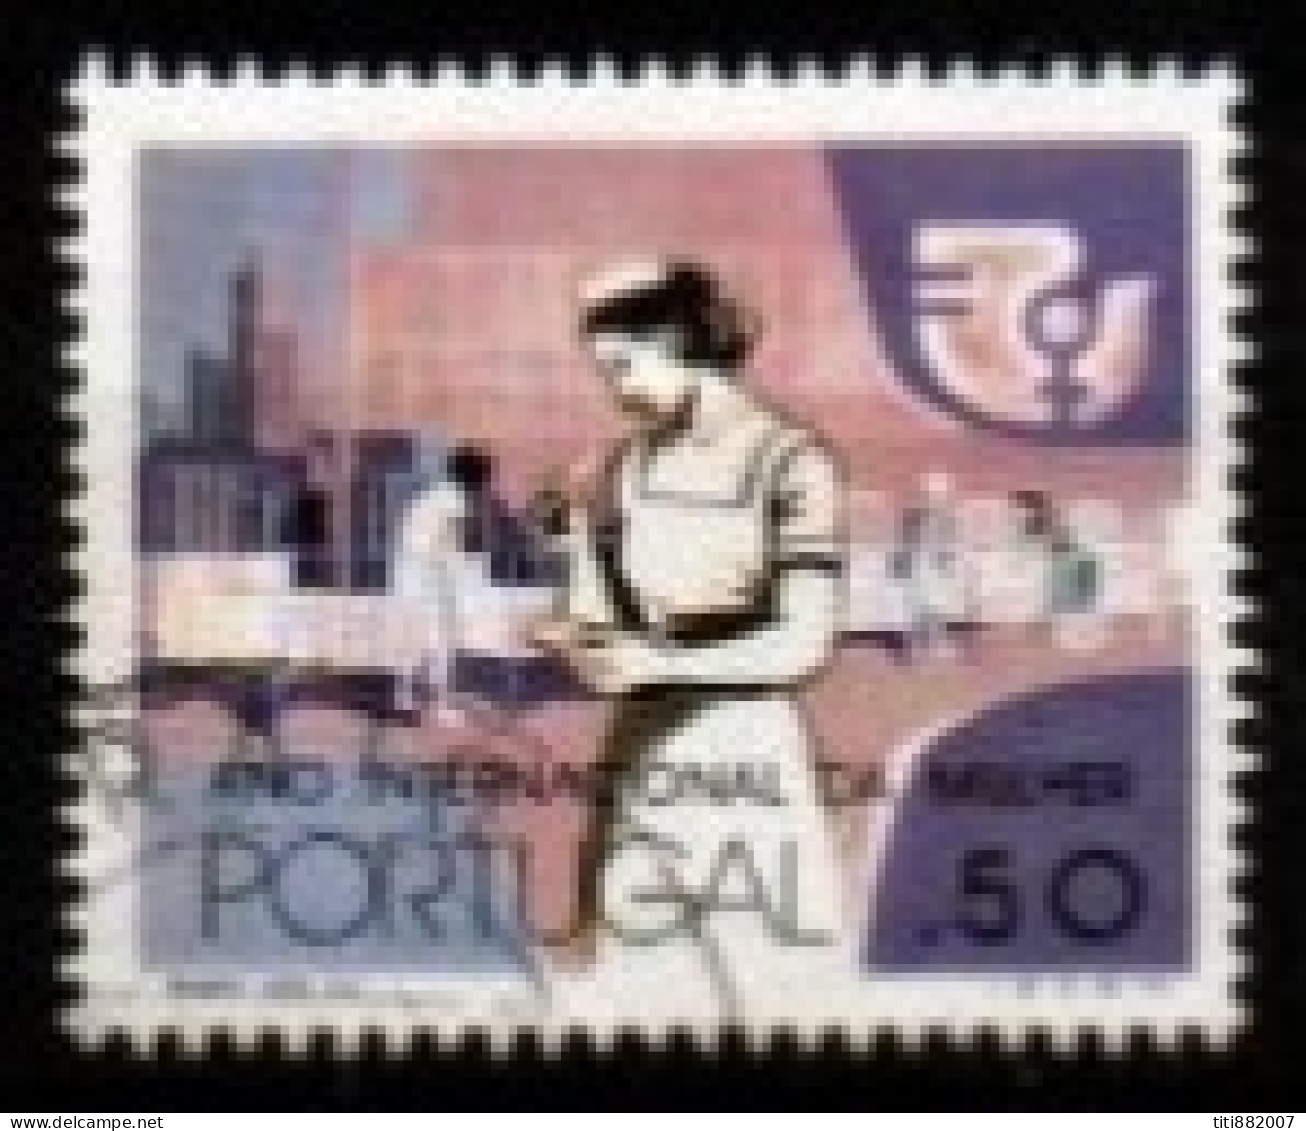 PORTUGAL    -   1975.    Y&T N° 1281 Oblitéré.   Infirmière - Used Stamps